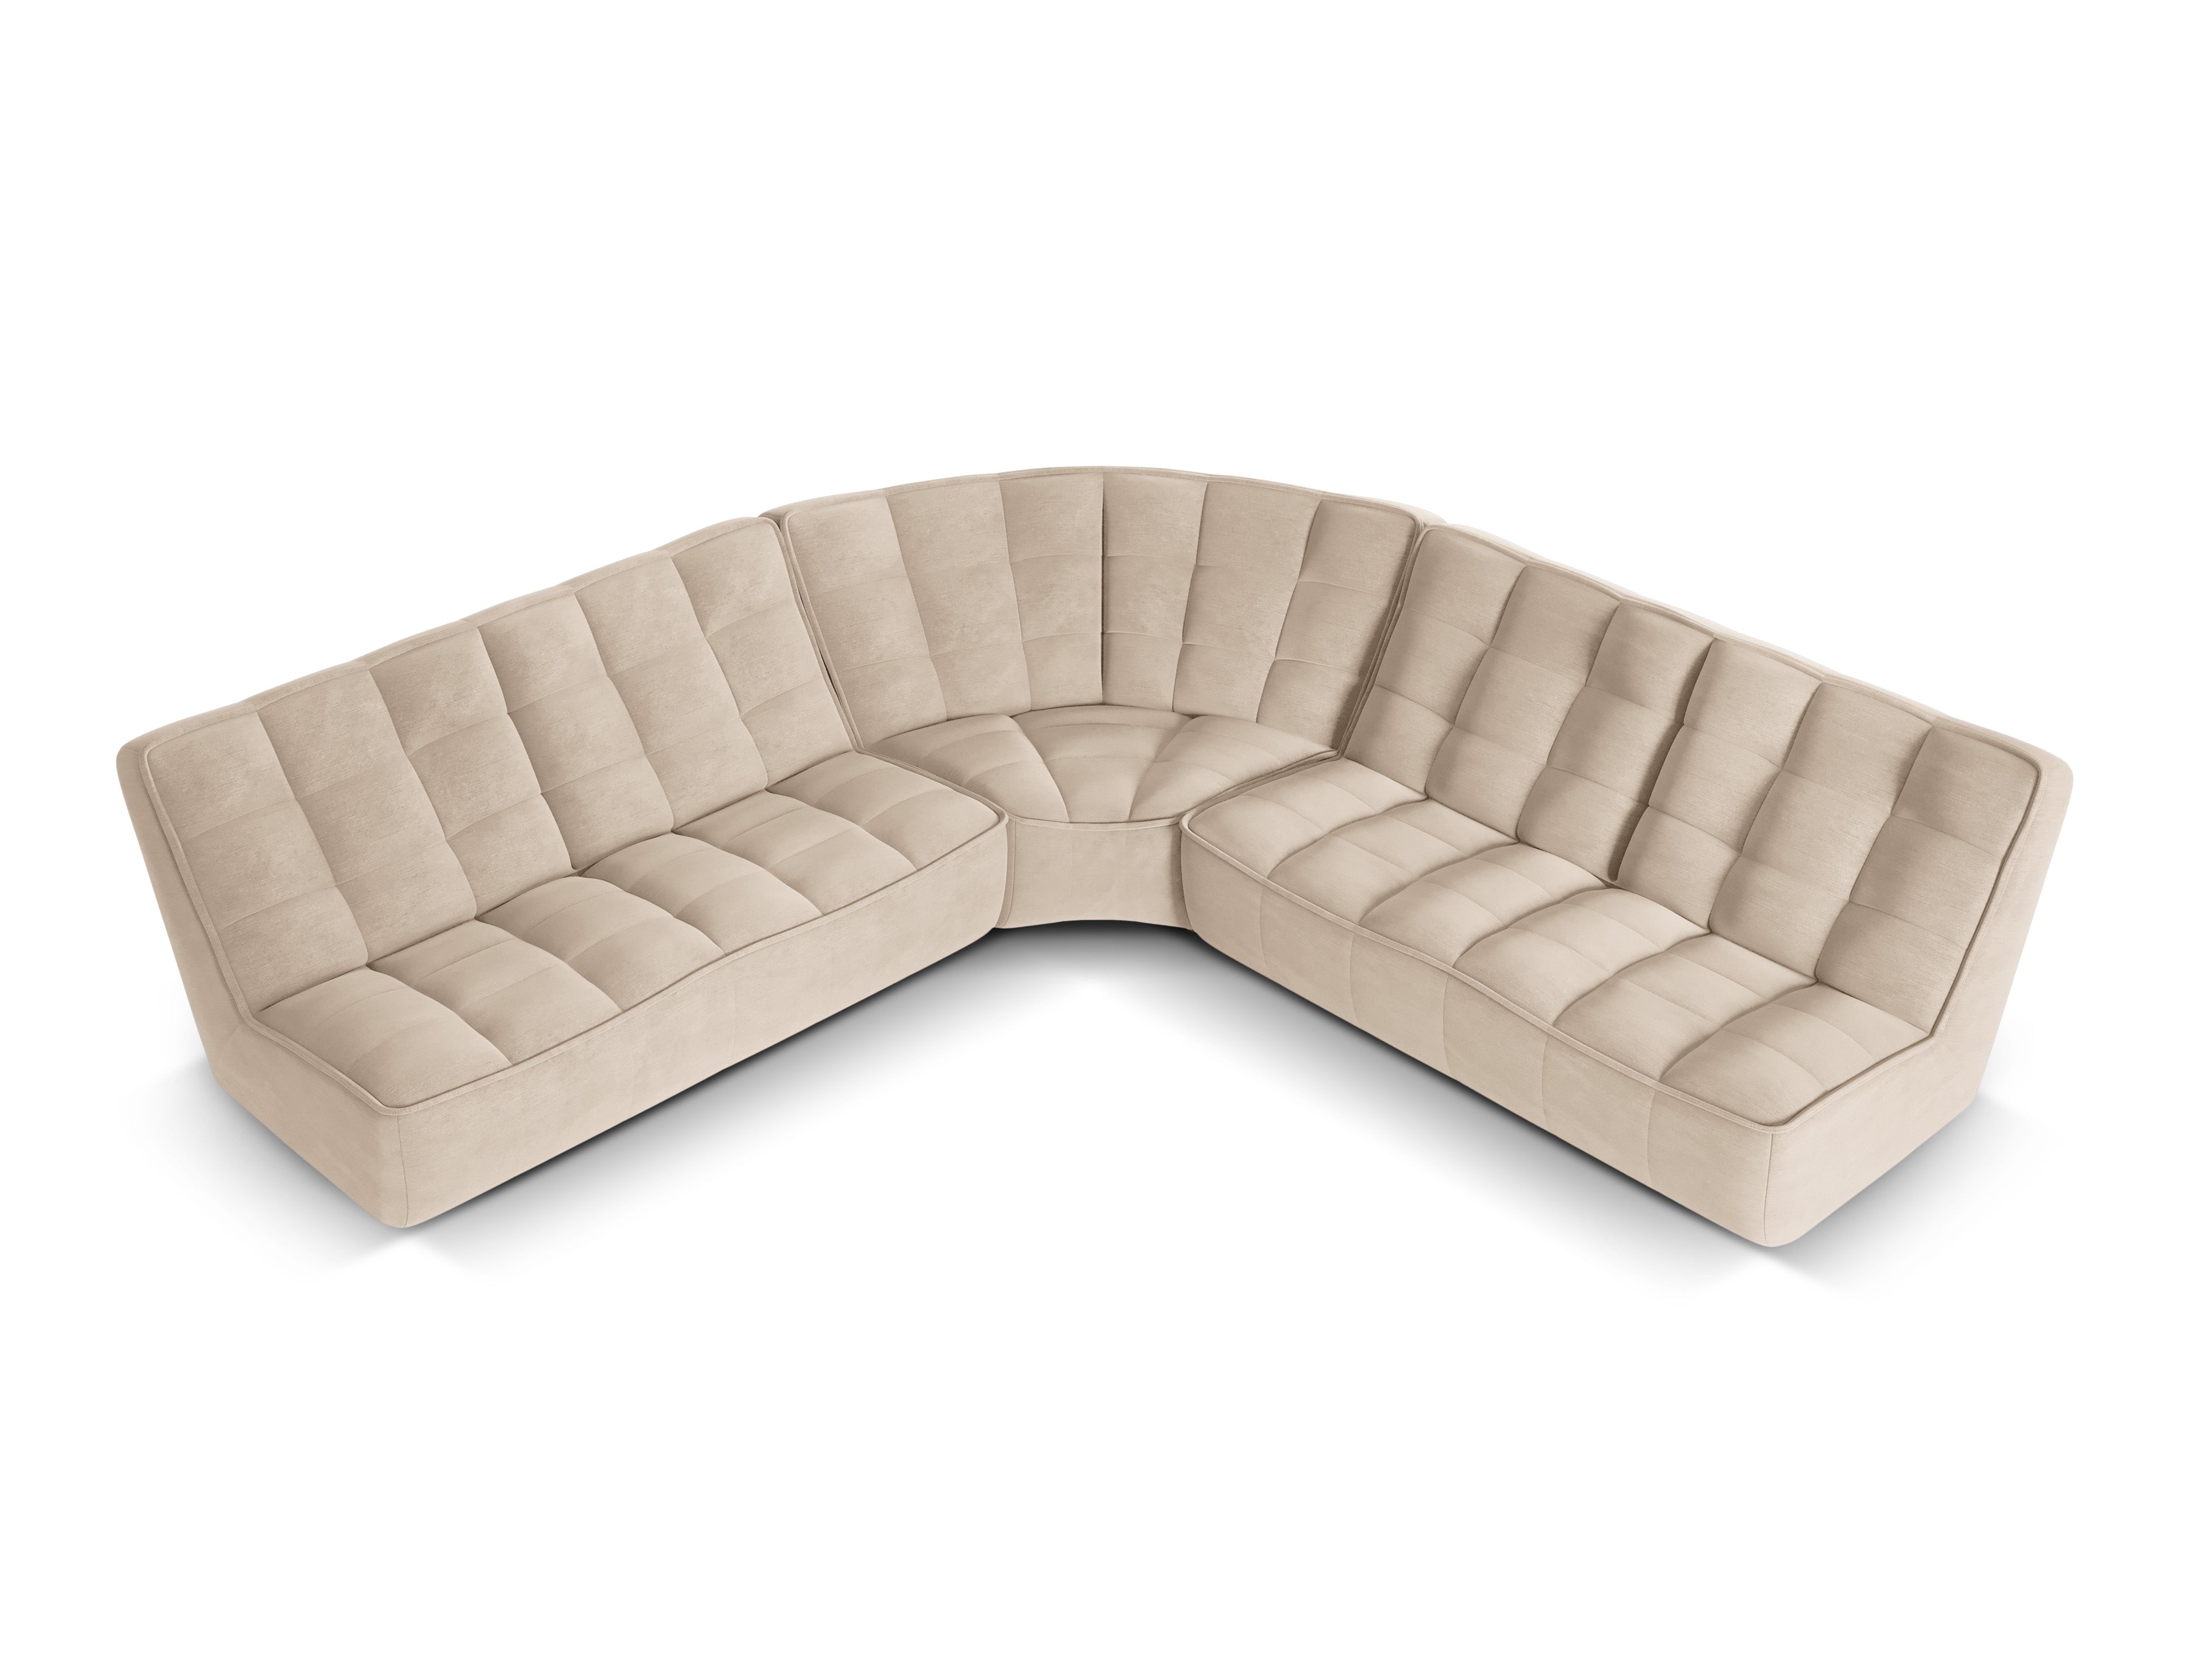 Symmetrical Modular Corner Sofa, "Moni", 6 Seats, 284x284x91
Made in Europe, Maison Heritage, Eye on Design